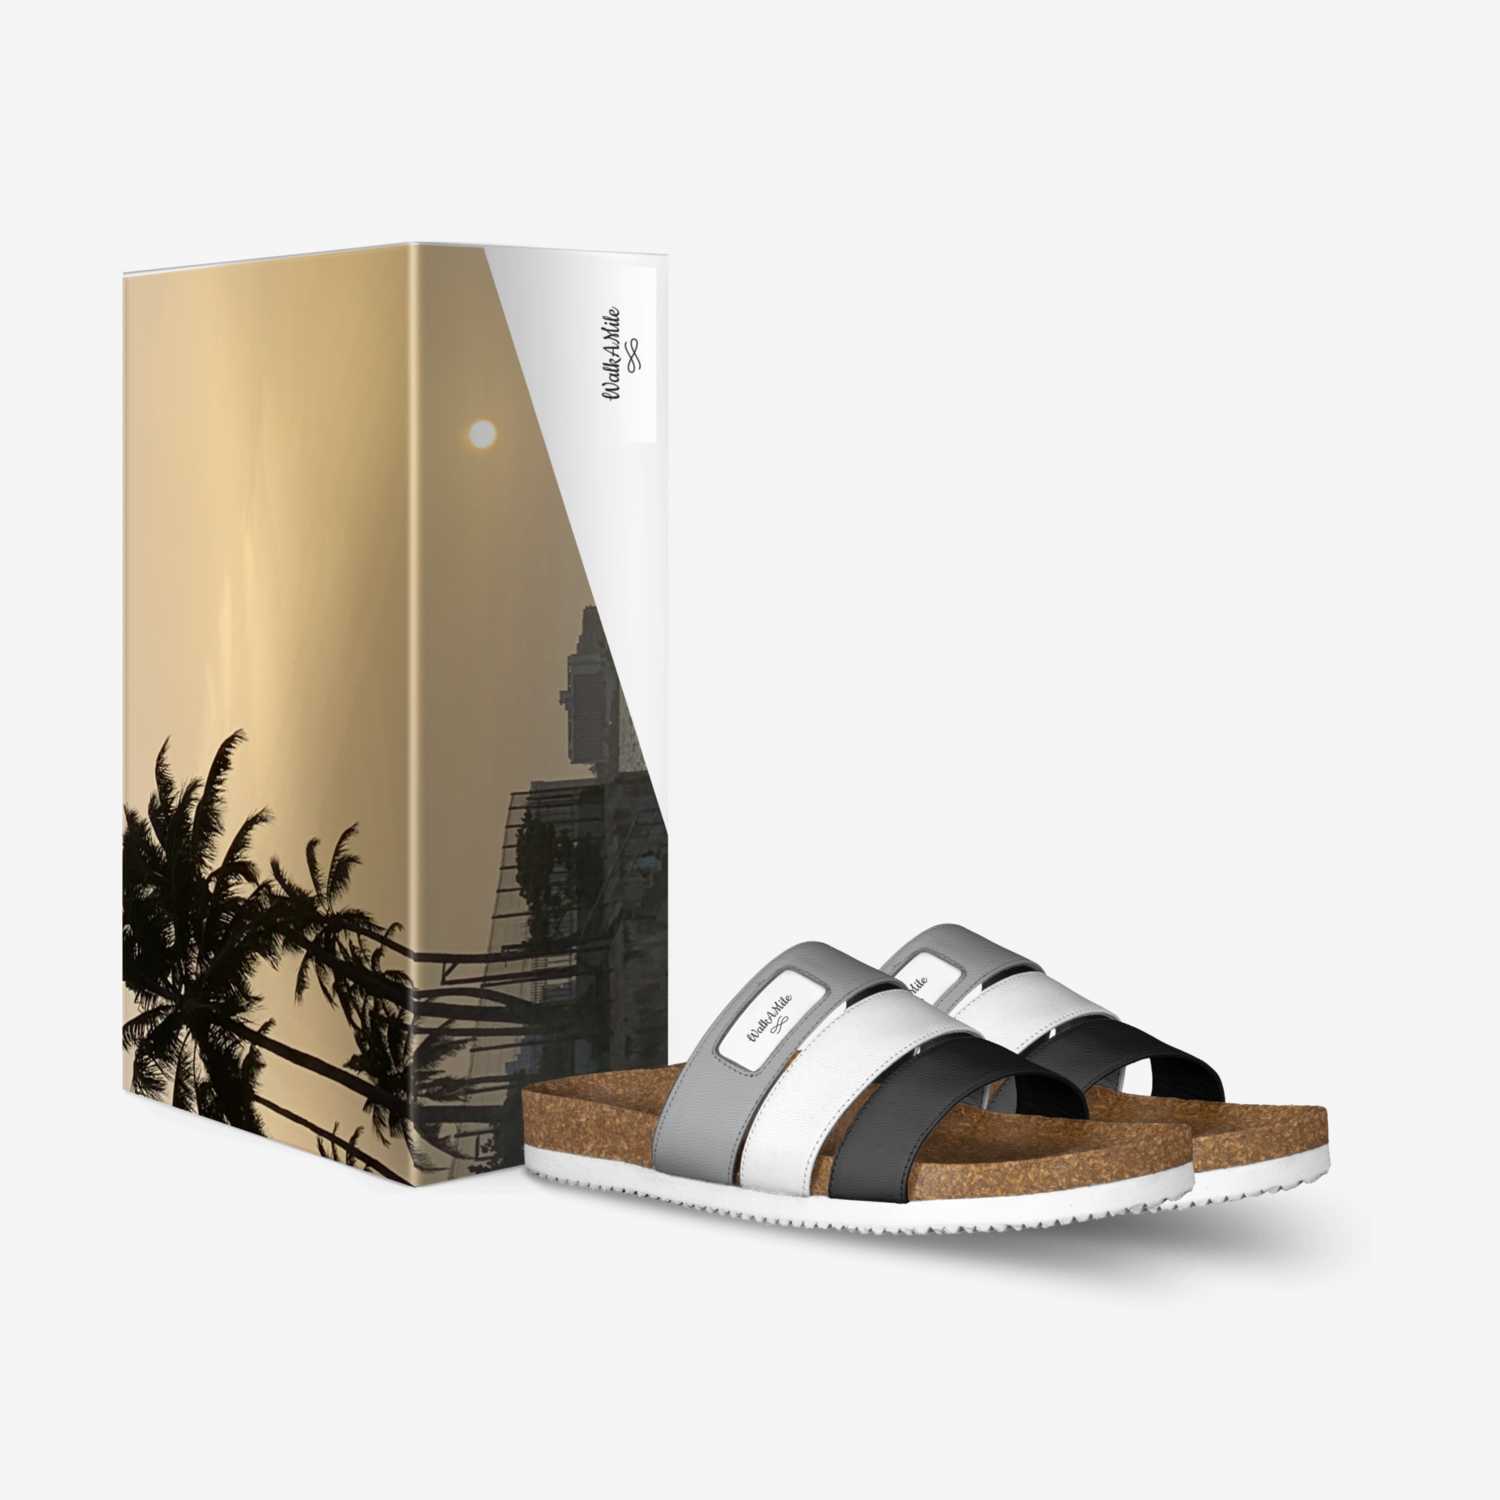 Aisha custom made in Italy shoes by Aisha Ewald | Box view